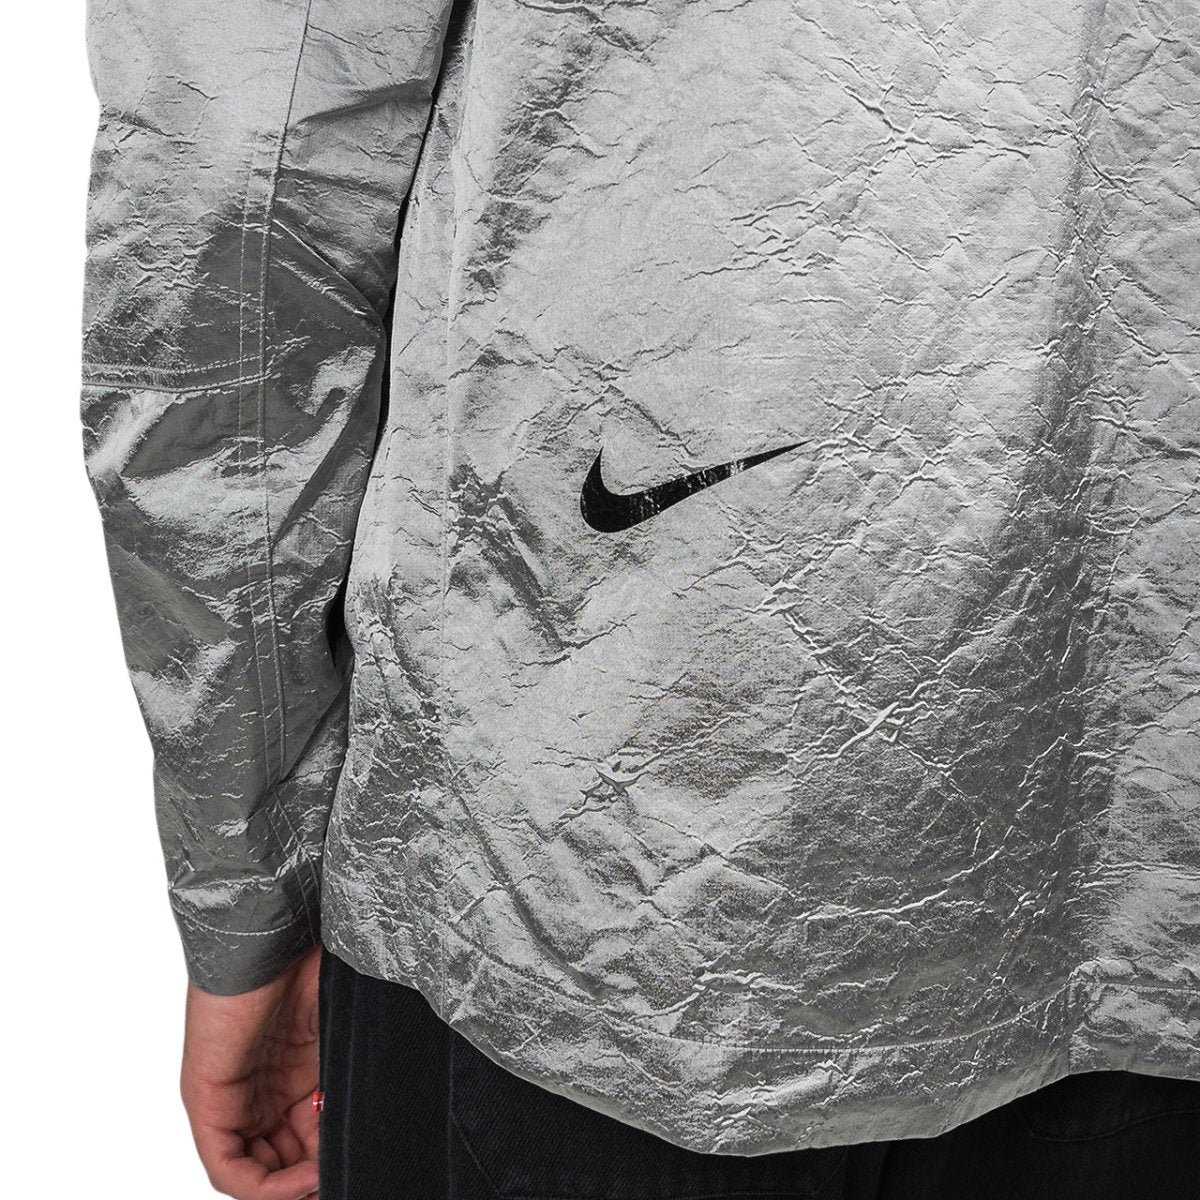 Nike Tech Pack Woven Hooded Jacket (Silber)  - Allike Store